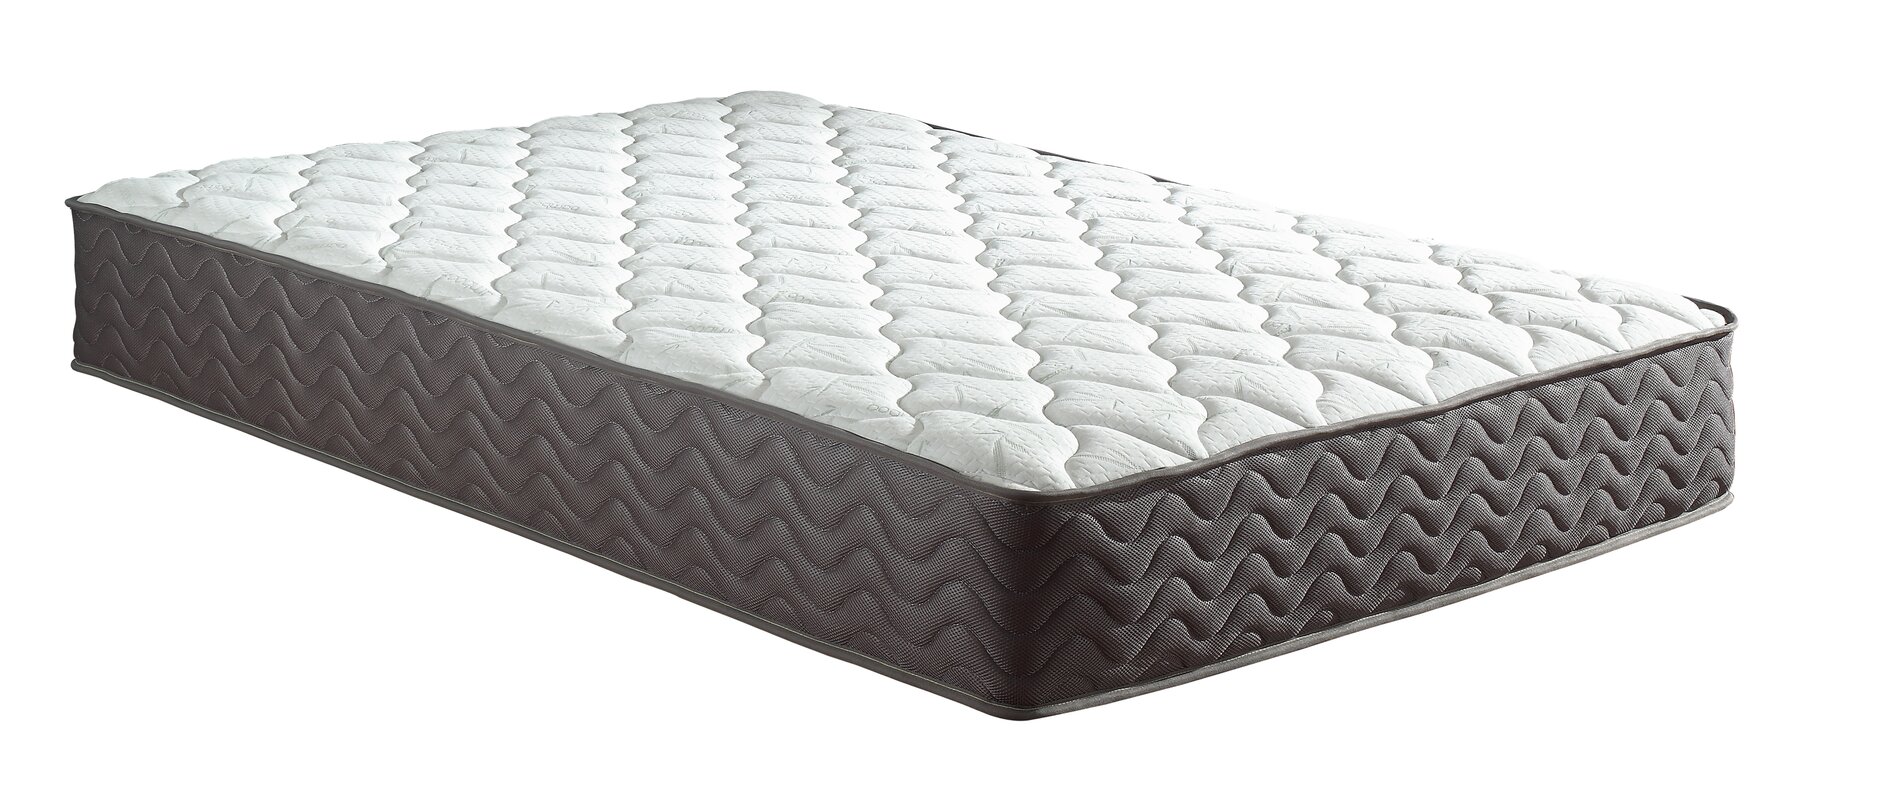 madison park mattress pad